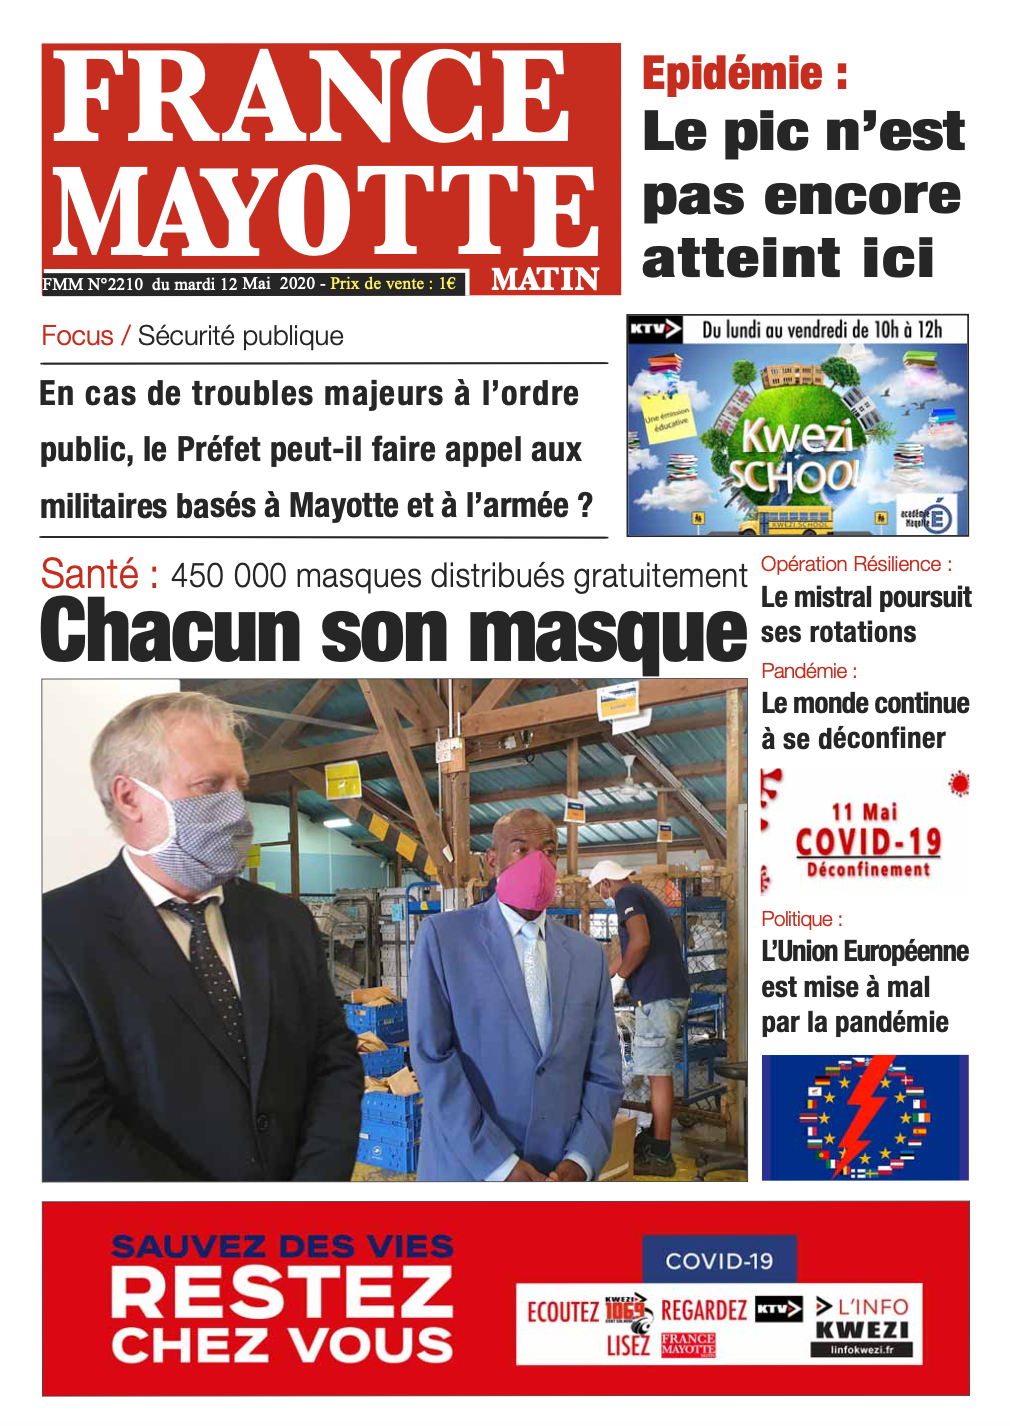 France Mayotte Mardi 12 mai 2020